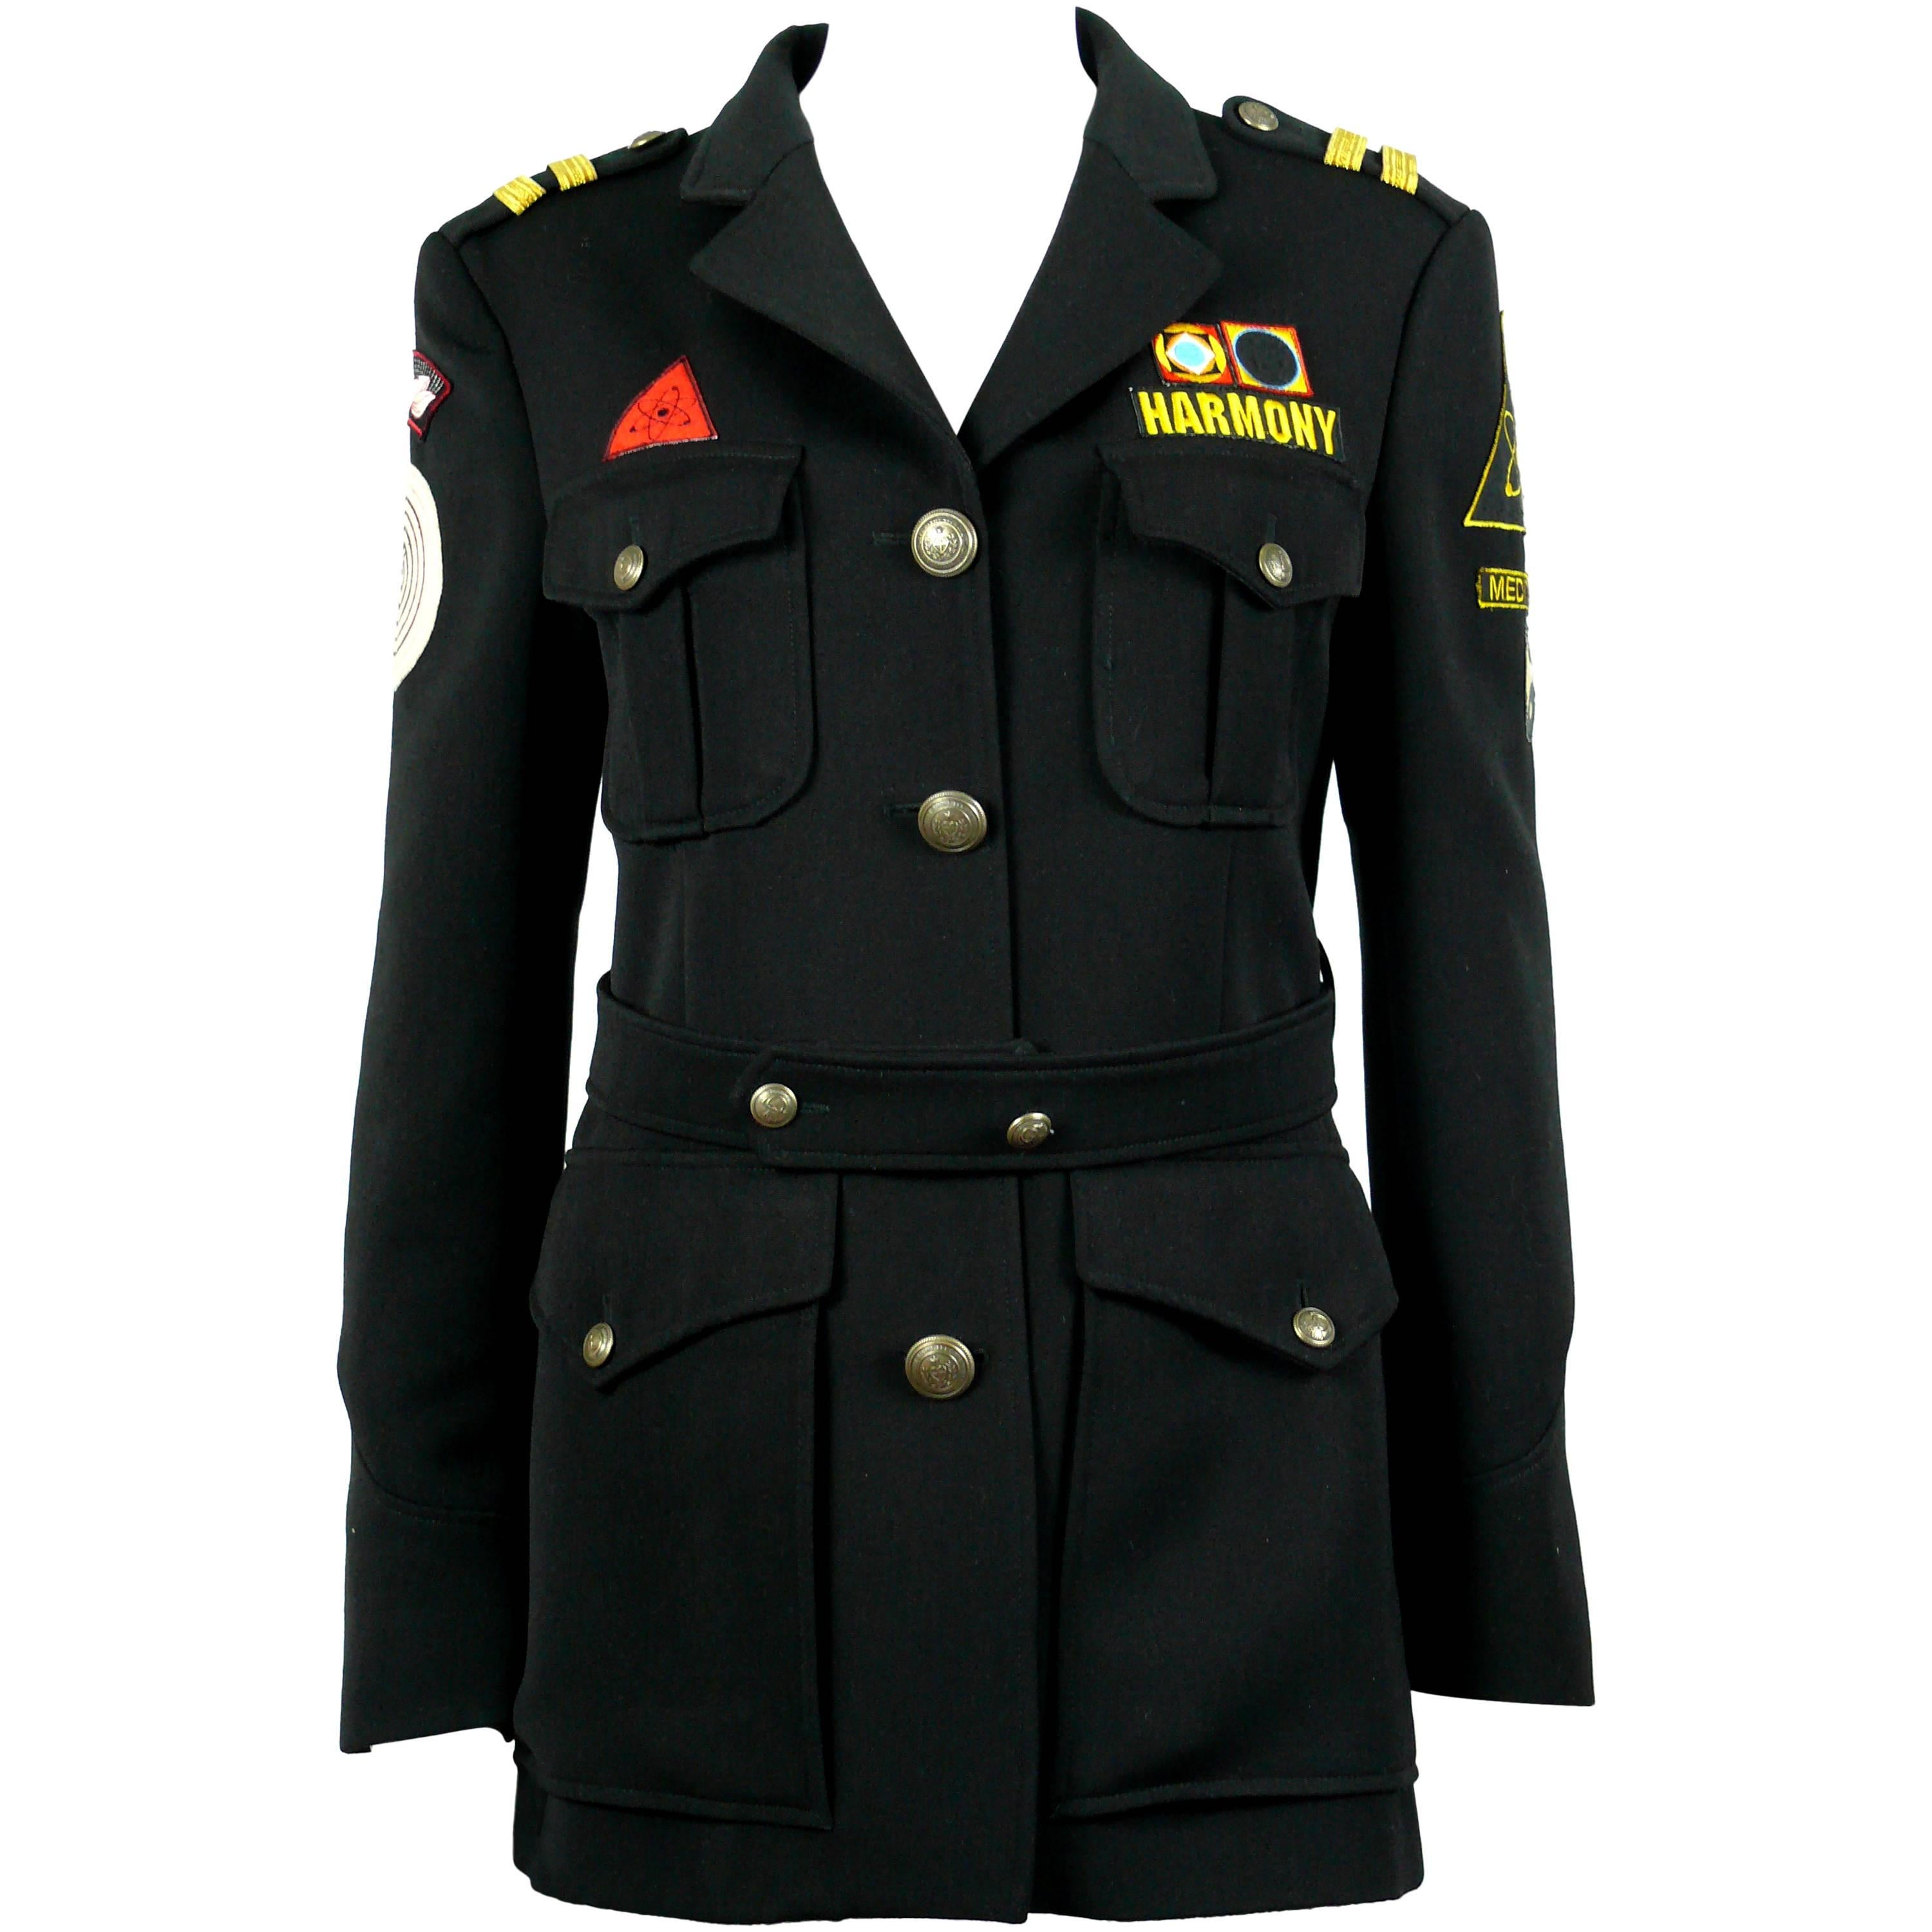 Moschino Vintage Military Style Harmony Wool Jacket  